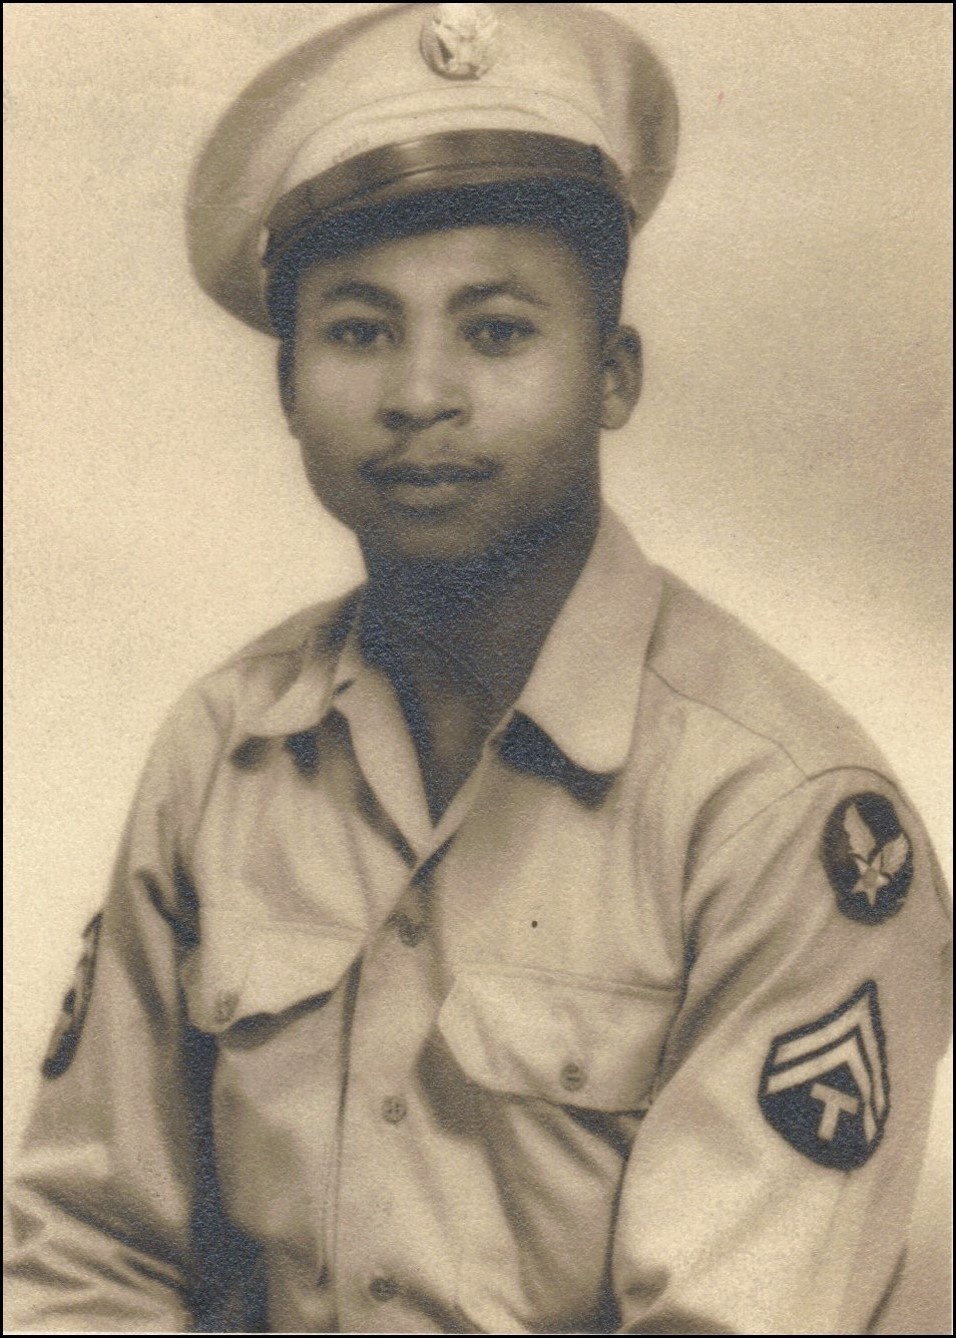 World War II Veteran Staff Sgt. Buddy Reynolds